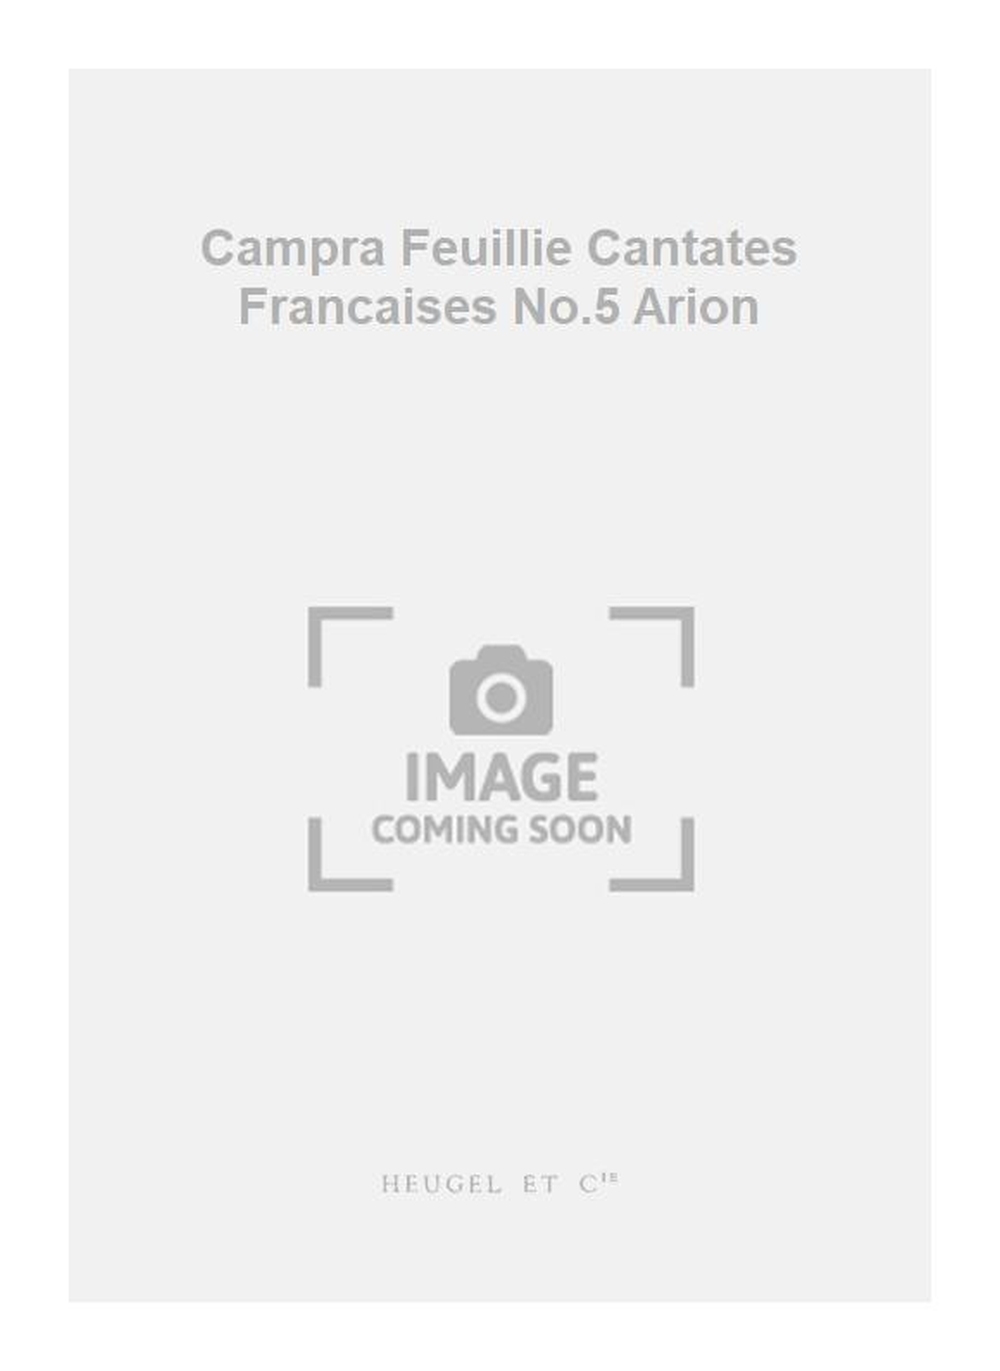 André Campra: Campra Feuillie Cantates Francaises No.5 Arion